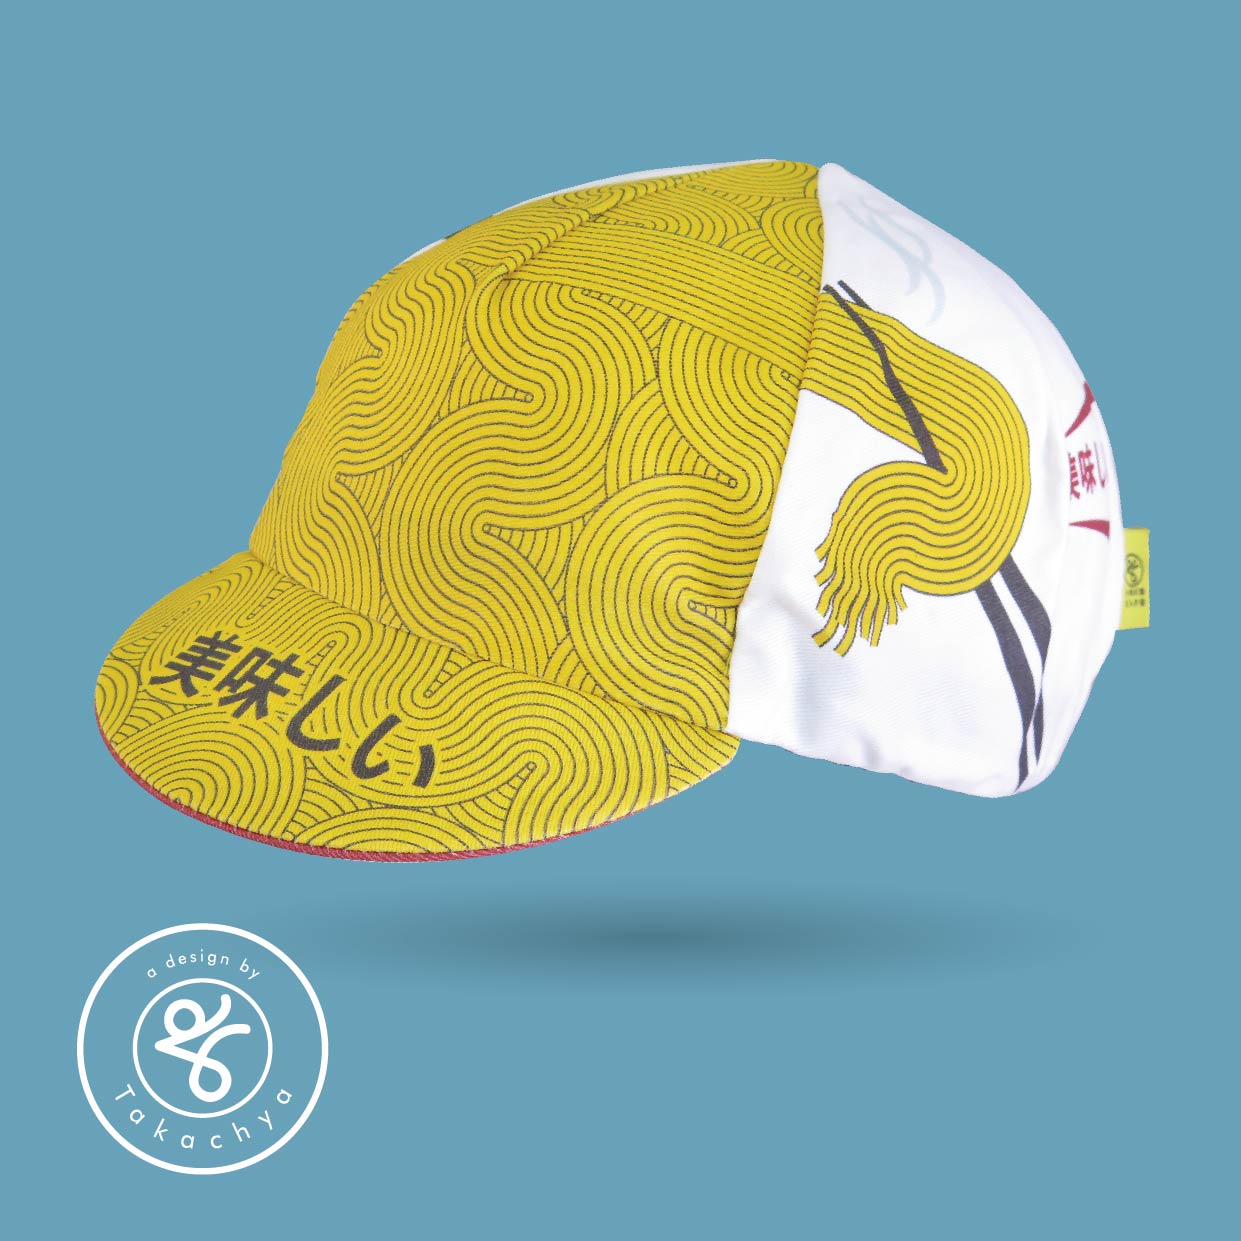 Me Love Ramen - A Design by Takachya Cycling Cap